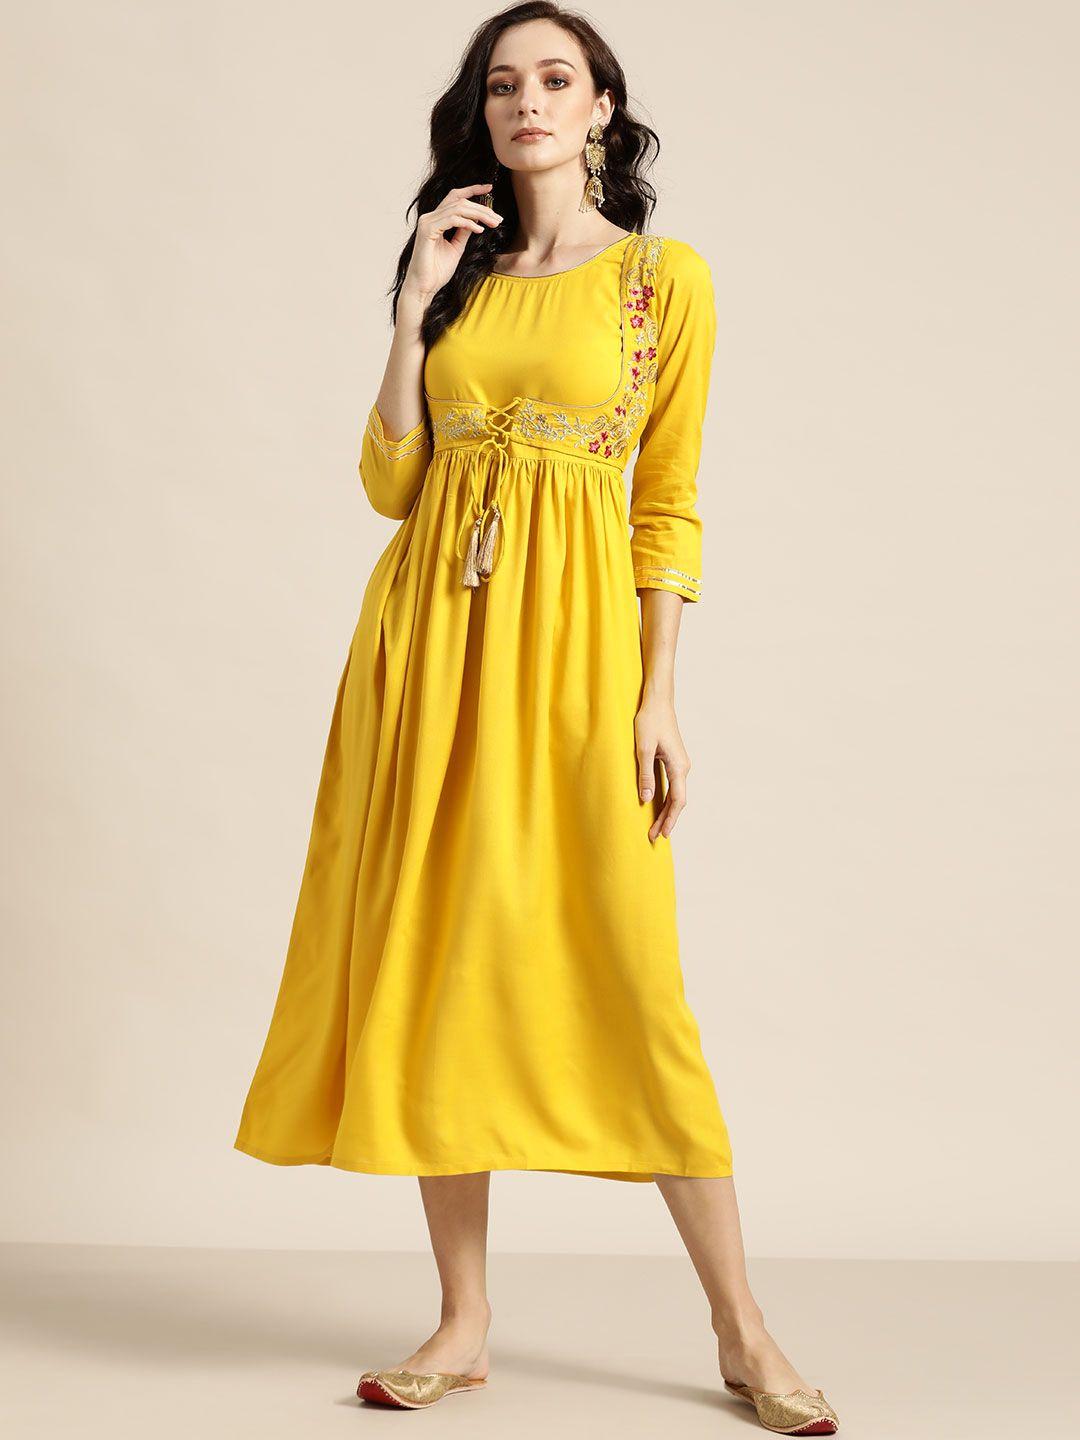 shae by sassafras yellow ethnic motifs embroidered liva ethnic a-line midi dress